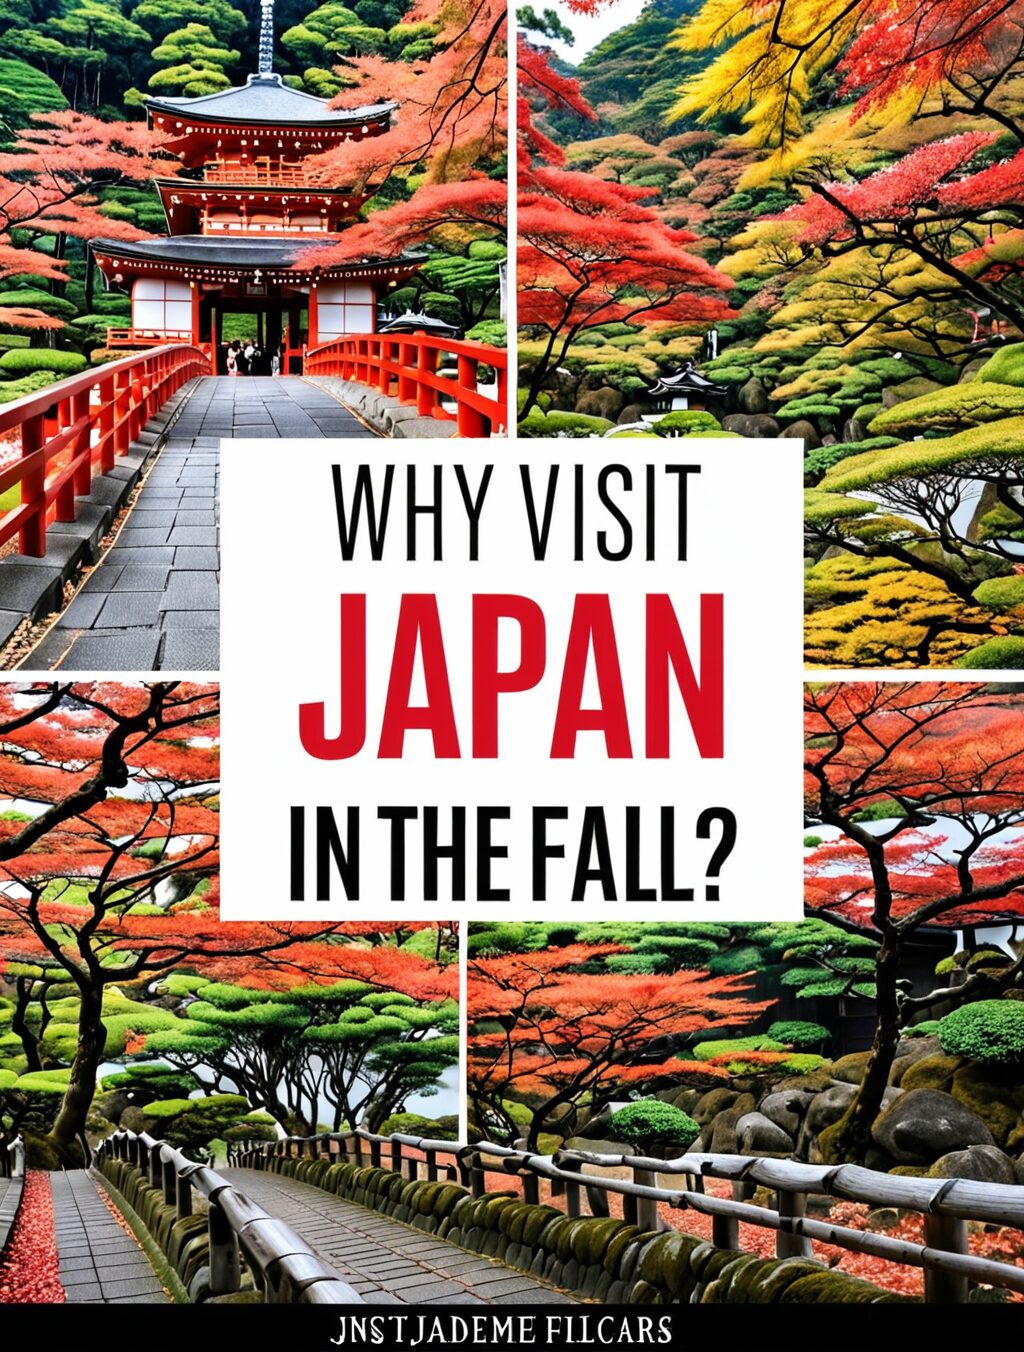 travel japan in october